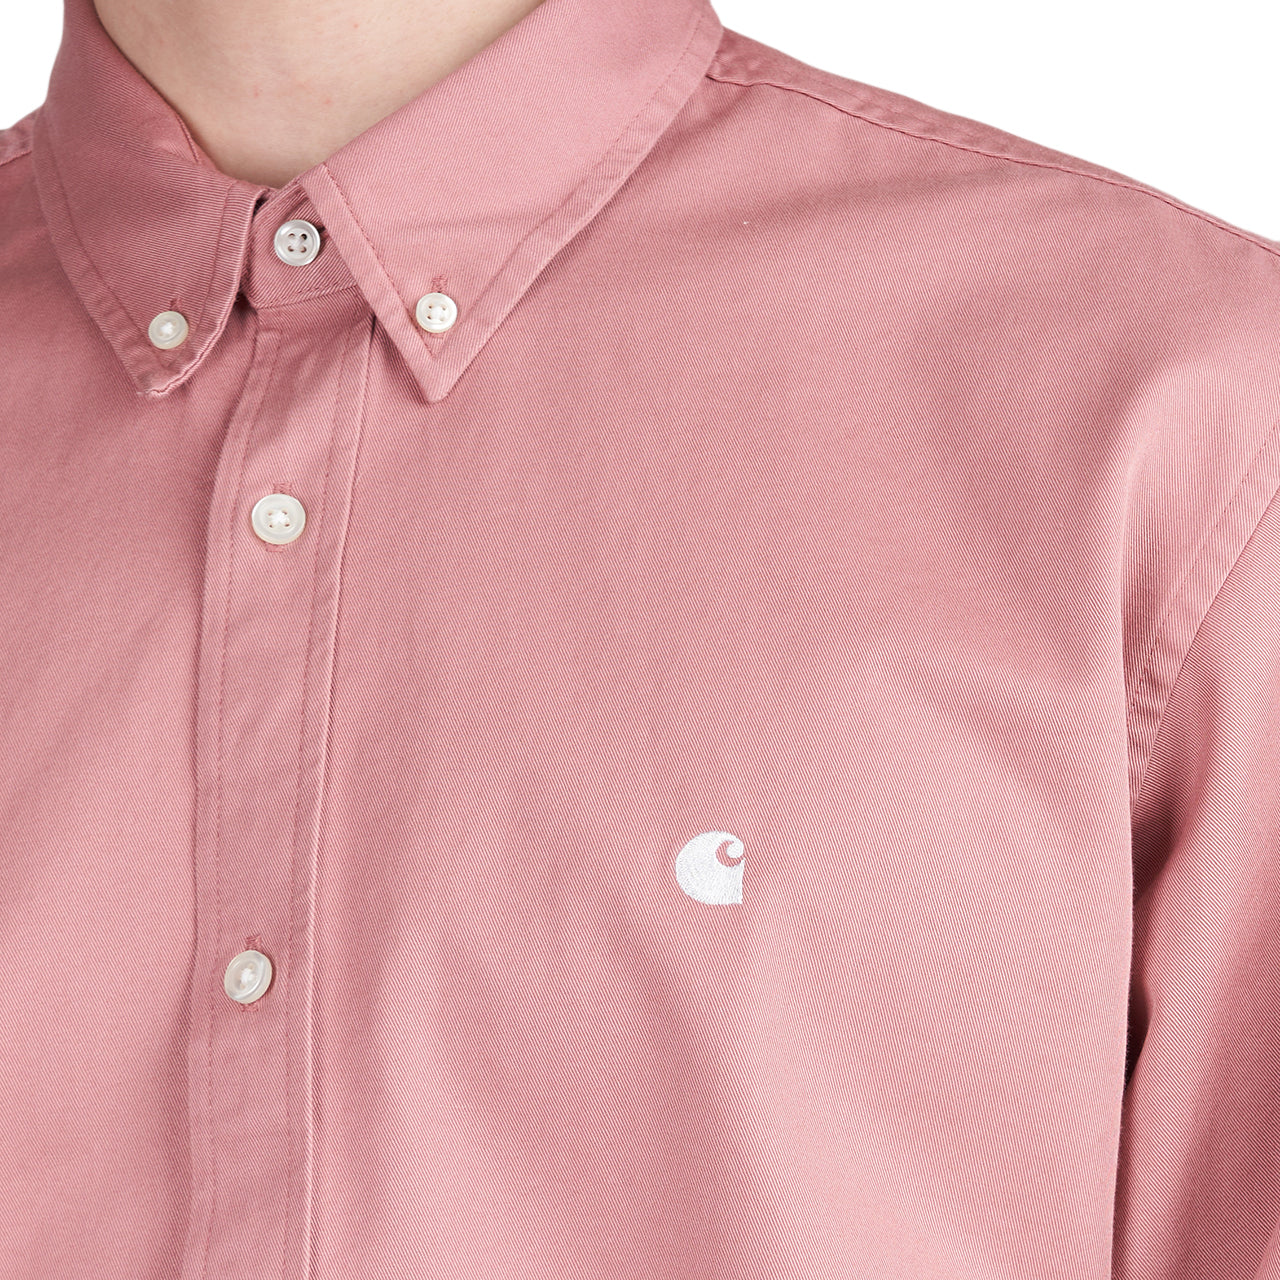 Carhartt WIP Longsleeve Madison Shirt (Rosa)  - Allike Store